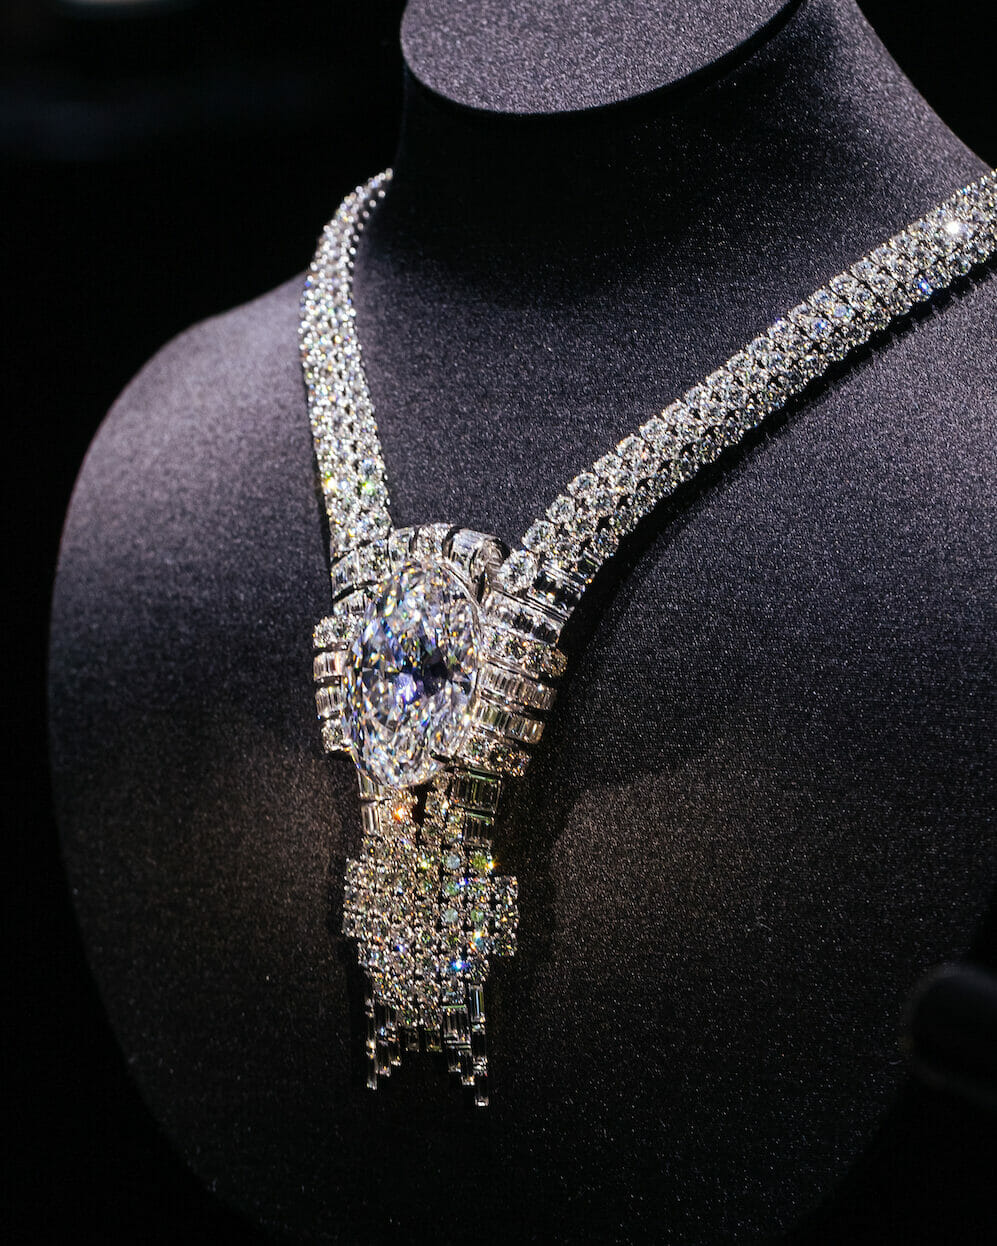 70 Ct Sparkling Diamonds Ladies Necklace White Gold 14K